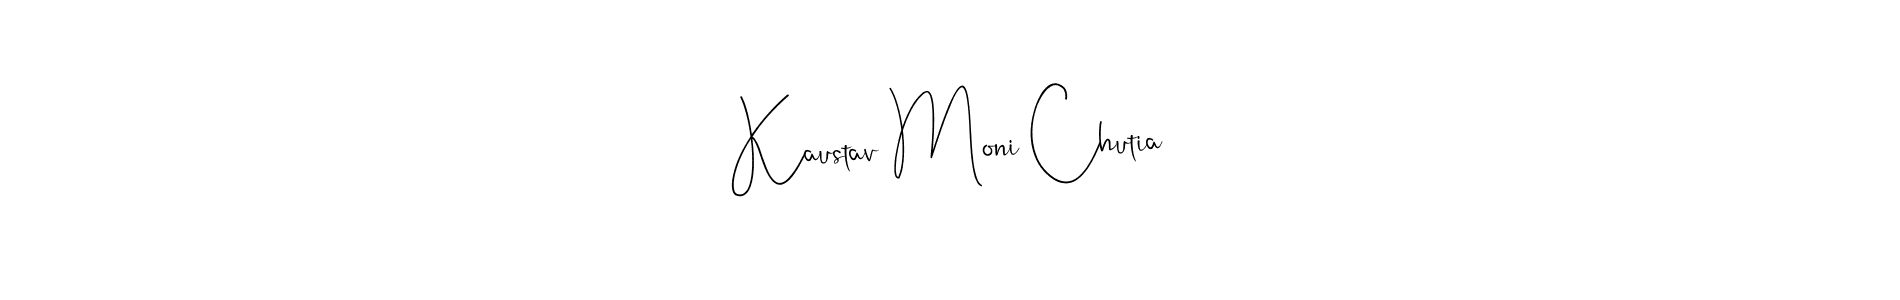 How to Draw Kaustav Moni Chutia signature style? Andilay-7BmLP is a latest design signature styles for name Kaustav Moni Chutia. Kaustav Moni Chutia signature style 4 images and pictures png